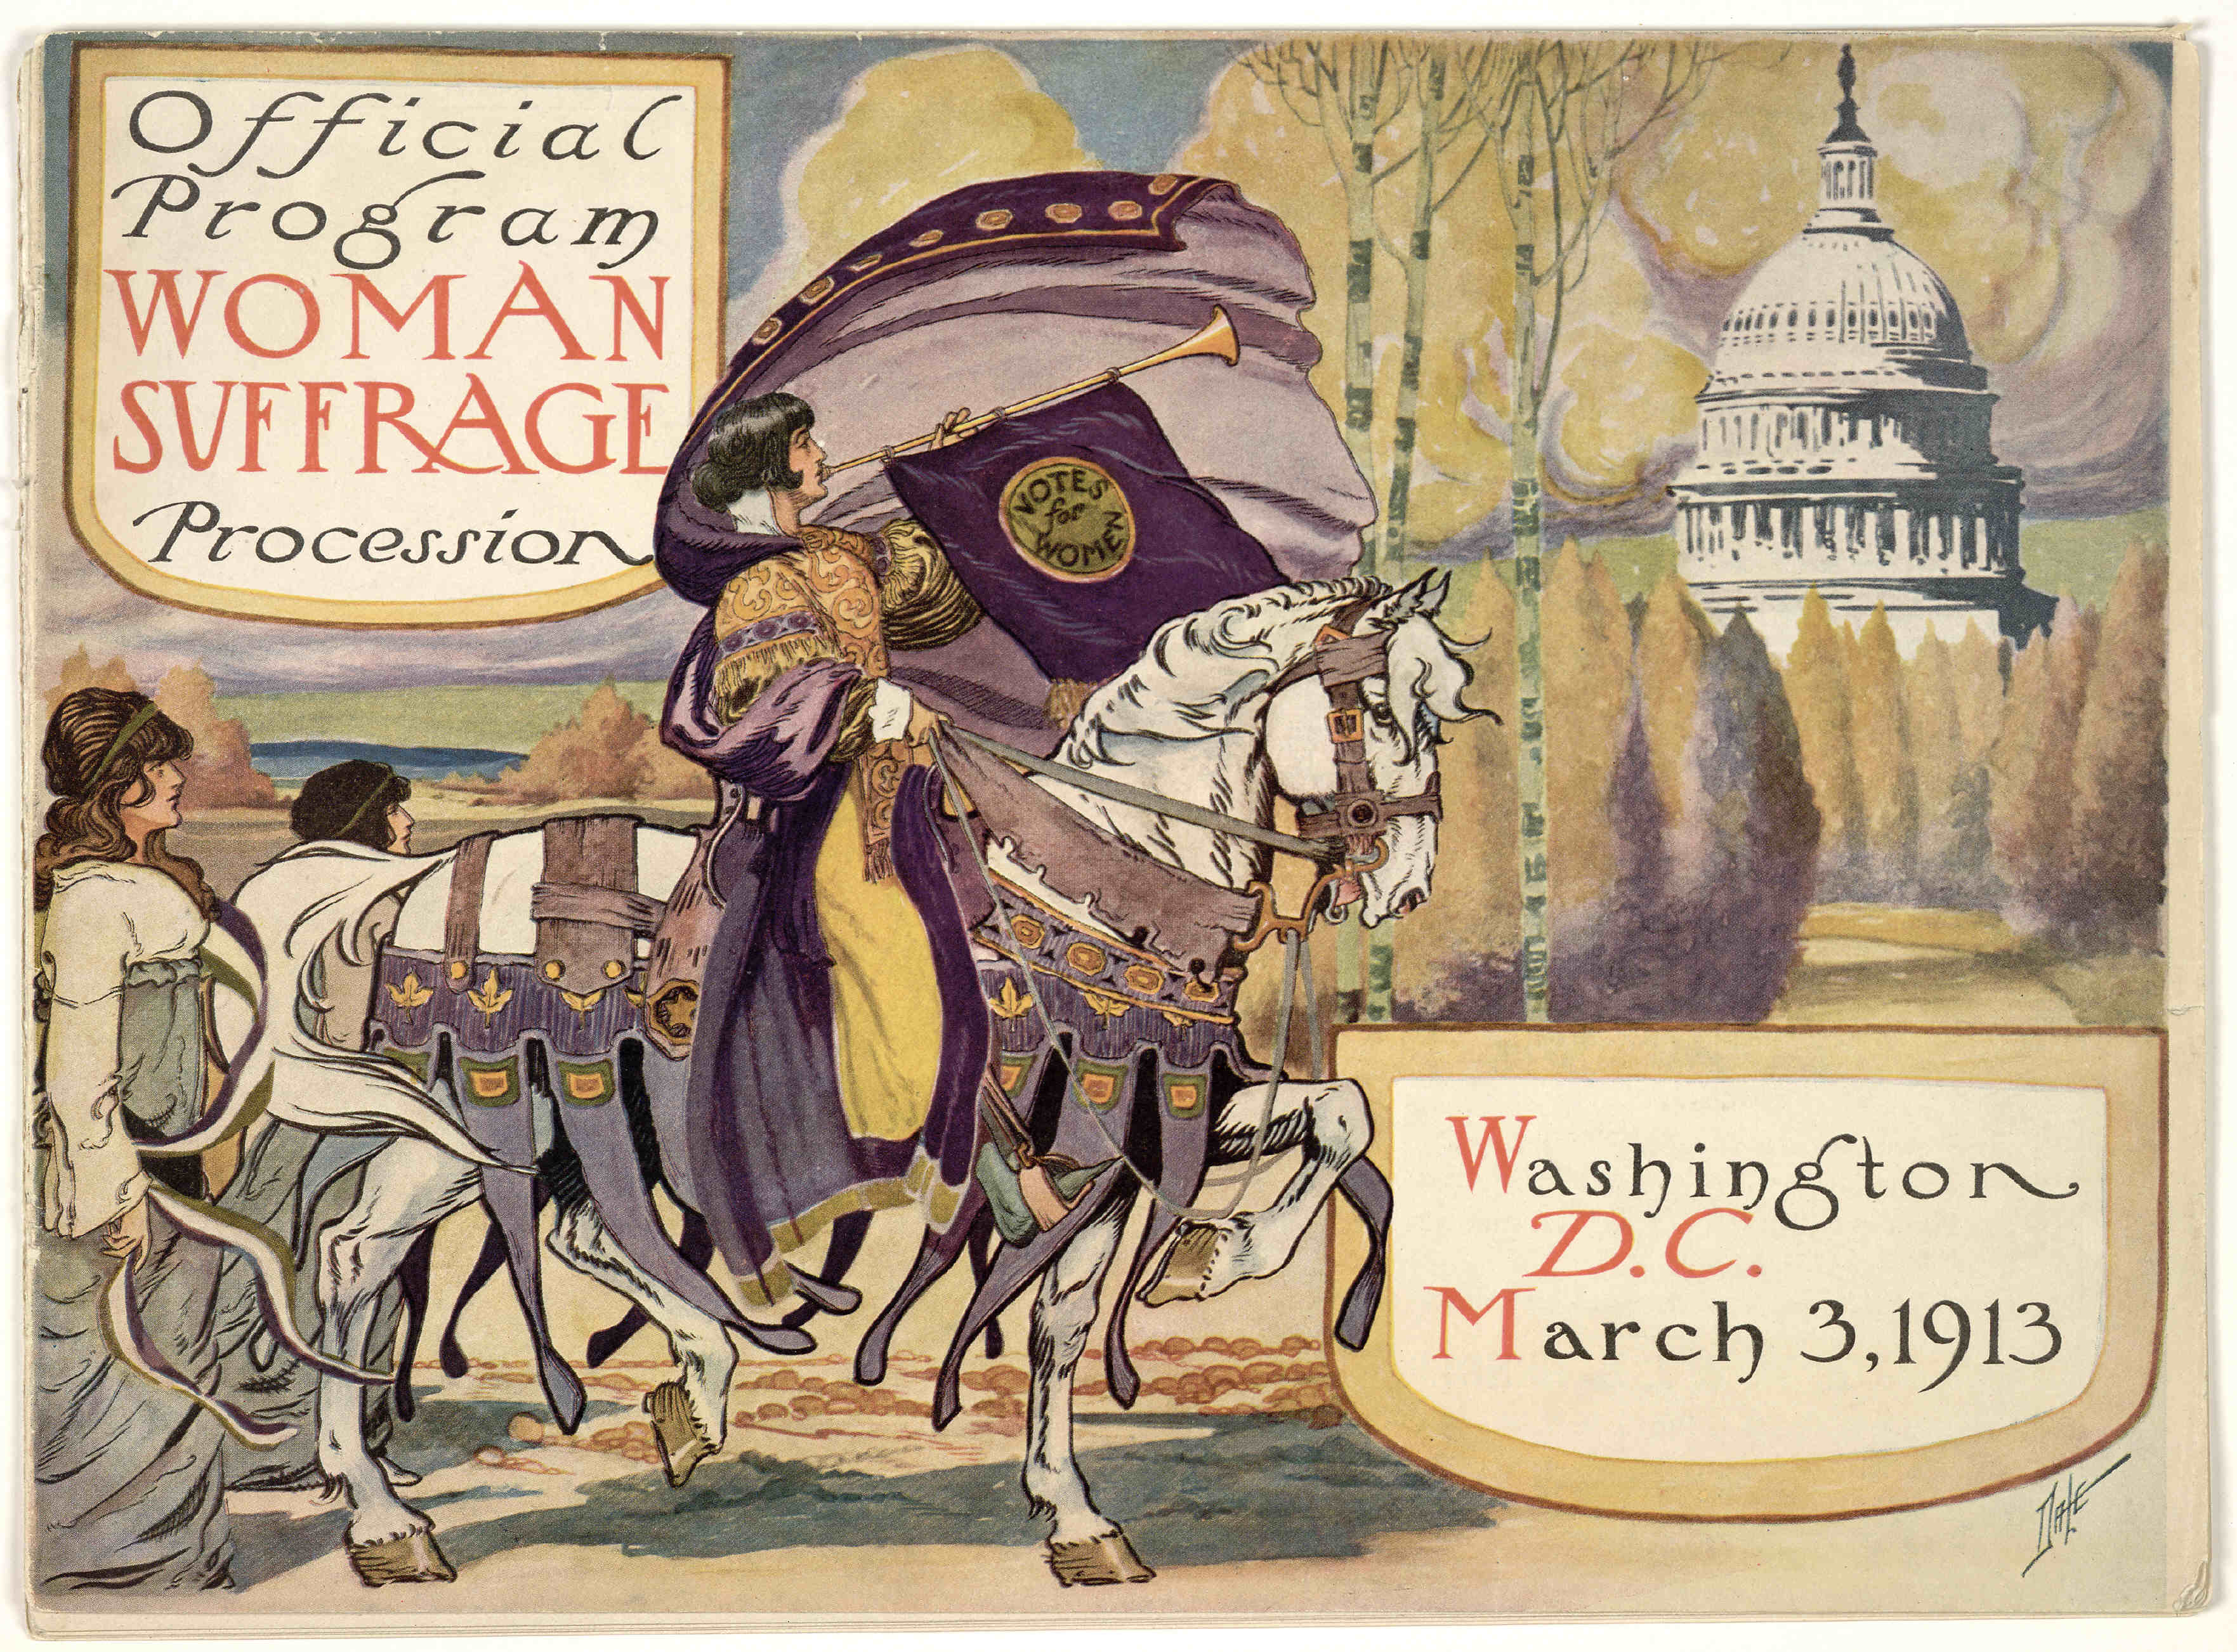 Woman suffrage procession